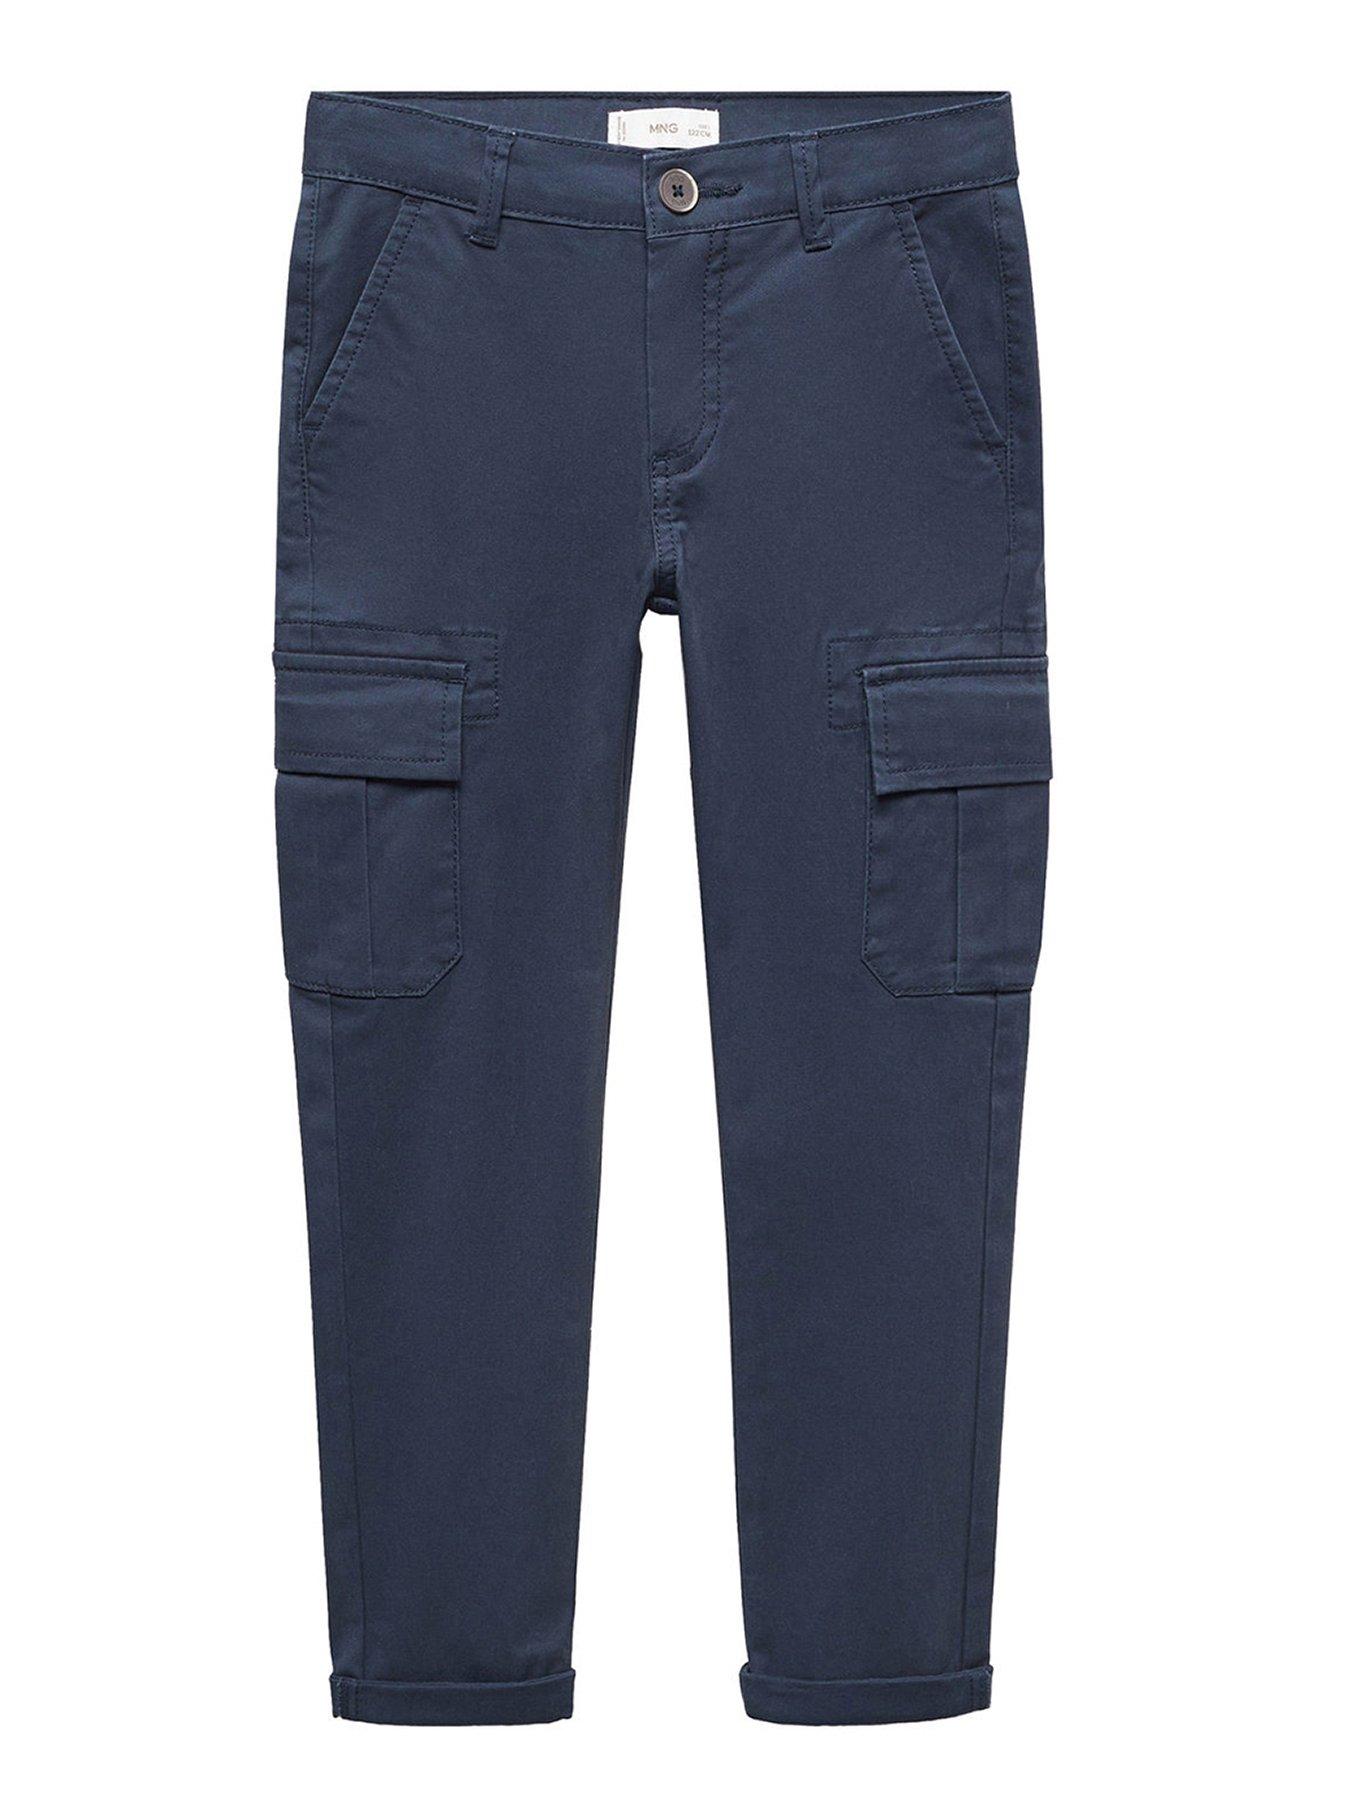 Joe Fresh Women's sz 6 blue navy Pocket Drawstring Cargo Pants